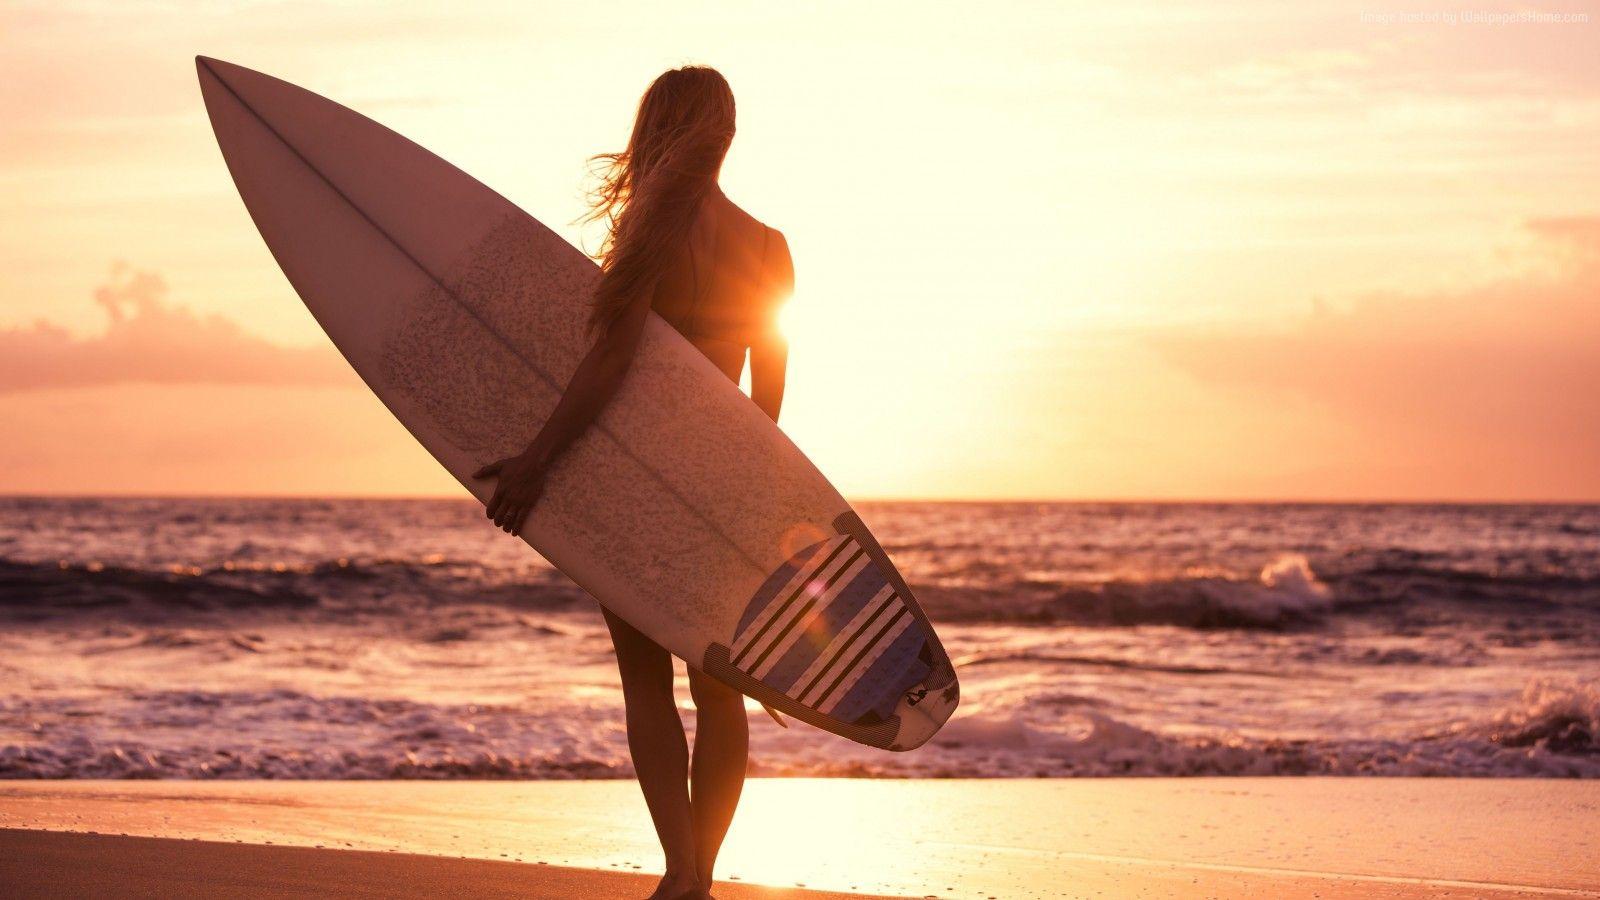 Surfing HD Desktop Wallpaper, Instagram photo, Backgrounds Image